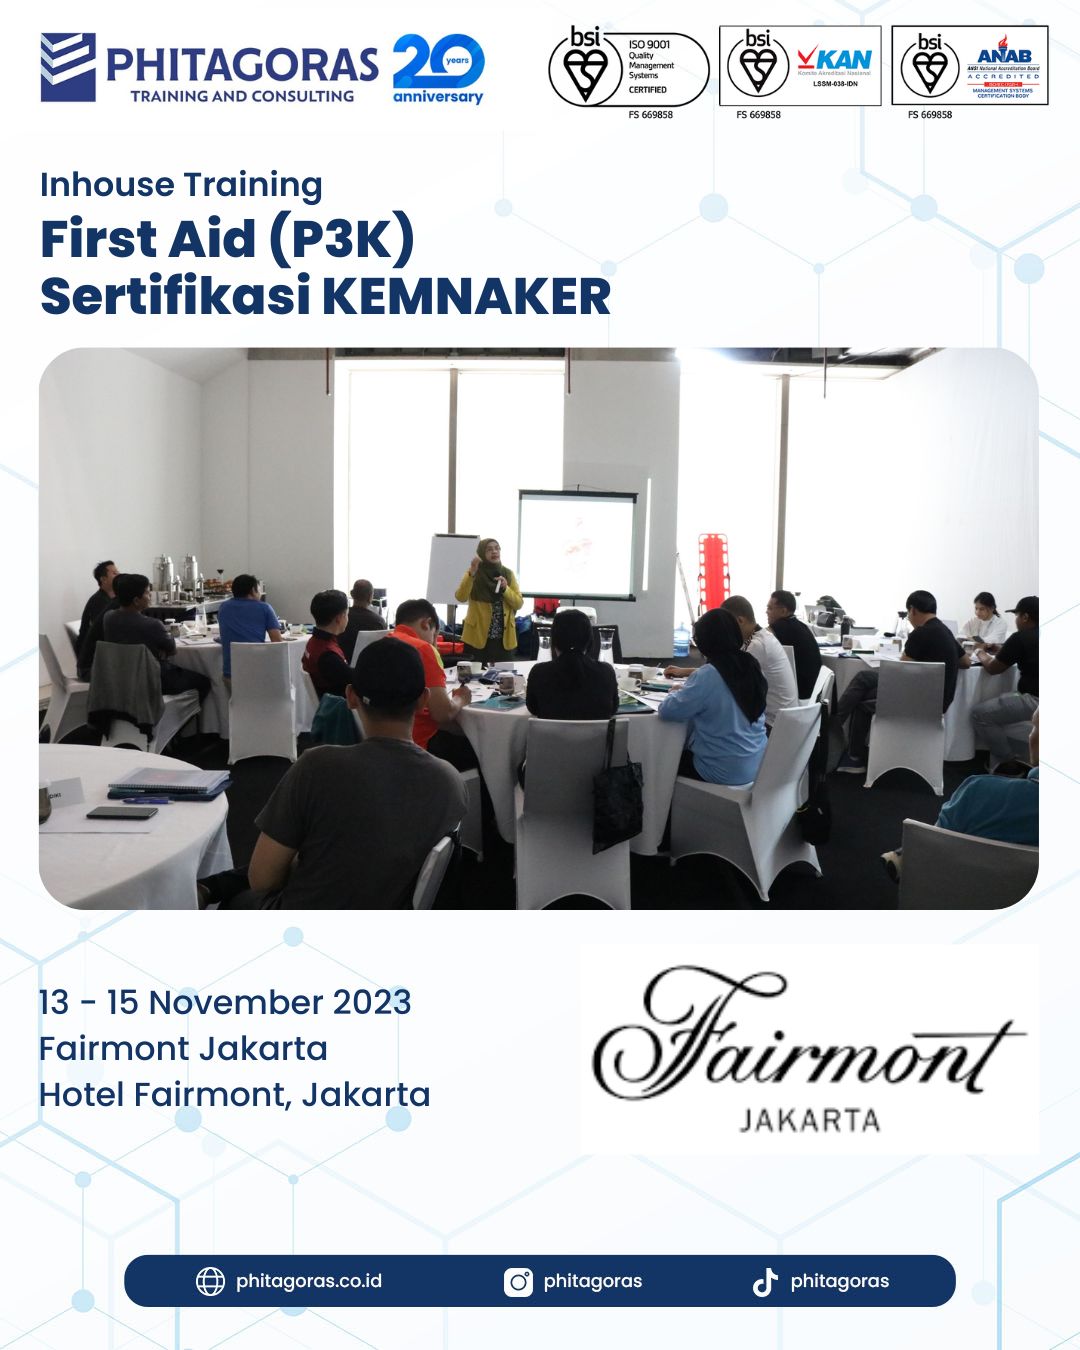 Inhouse Training First Aid (P3K) Sertifikasi KEMNAKER di Fairmont Jakarta